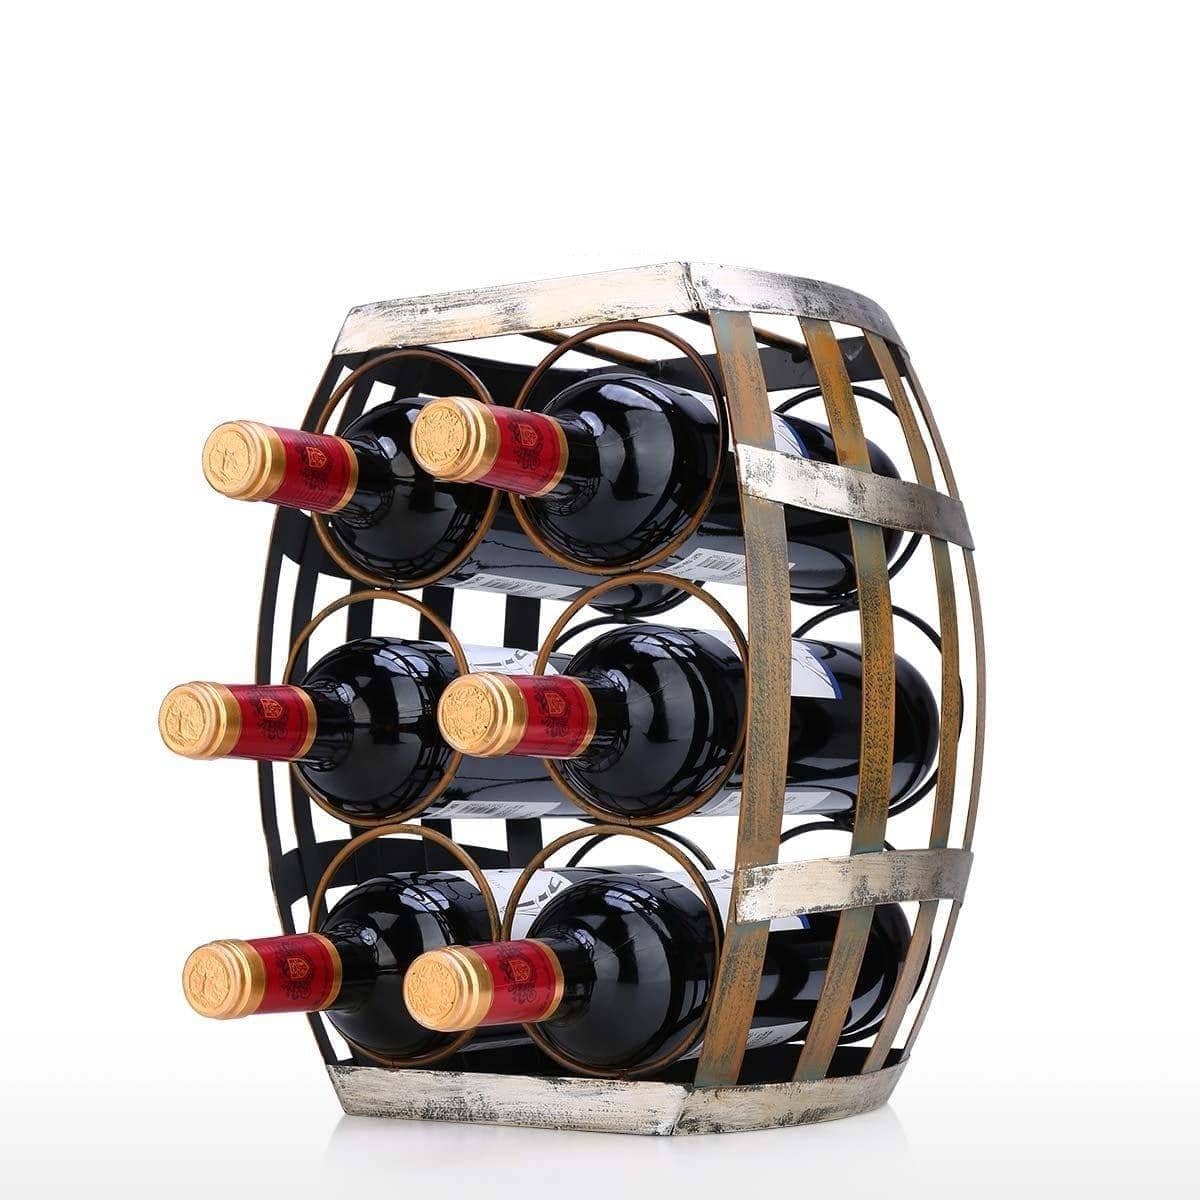 Display Your Wines in Style with Barrel Iron Metal Wine Storage Rack & Holder - Retro & Elegant